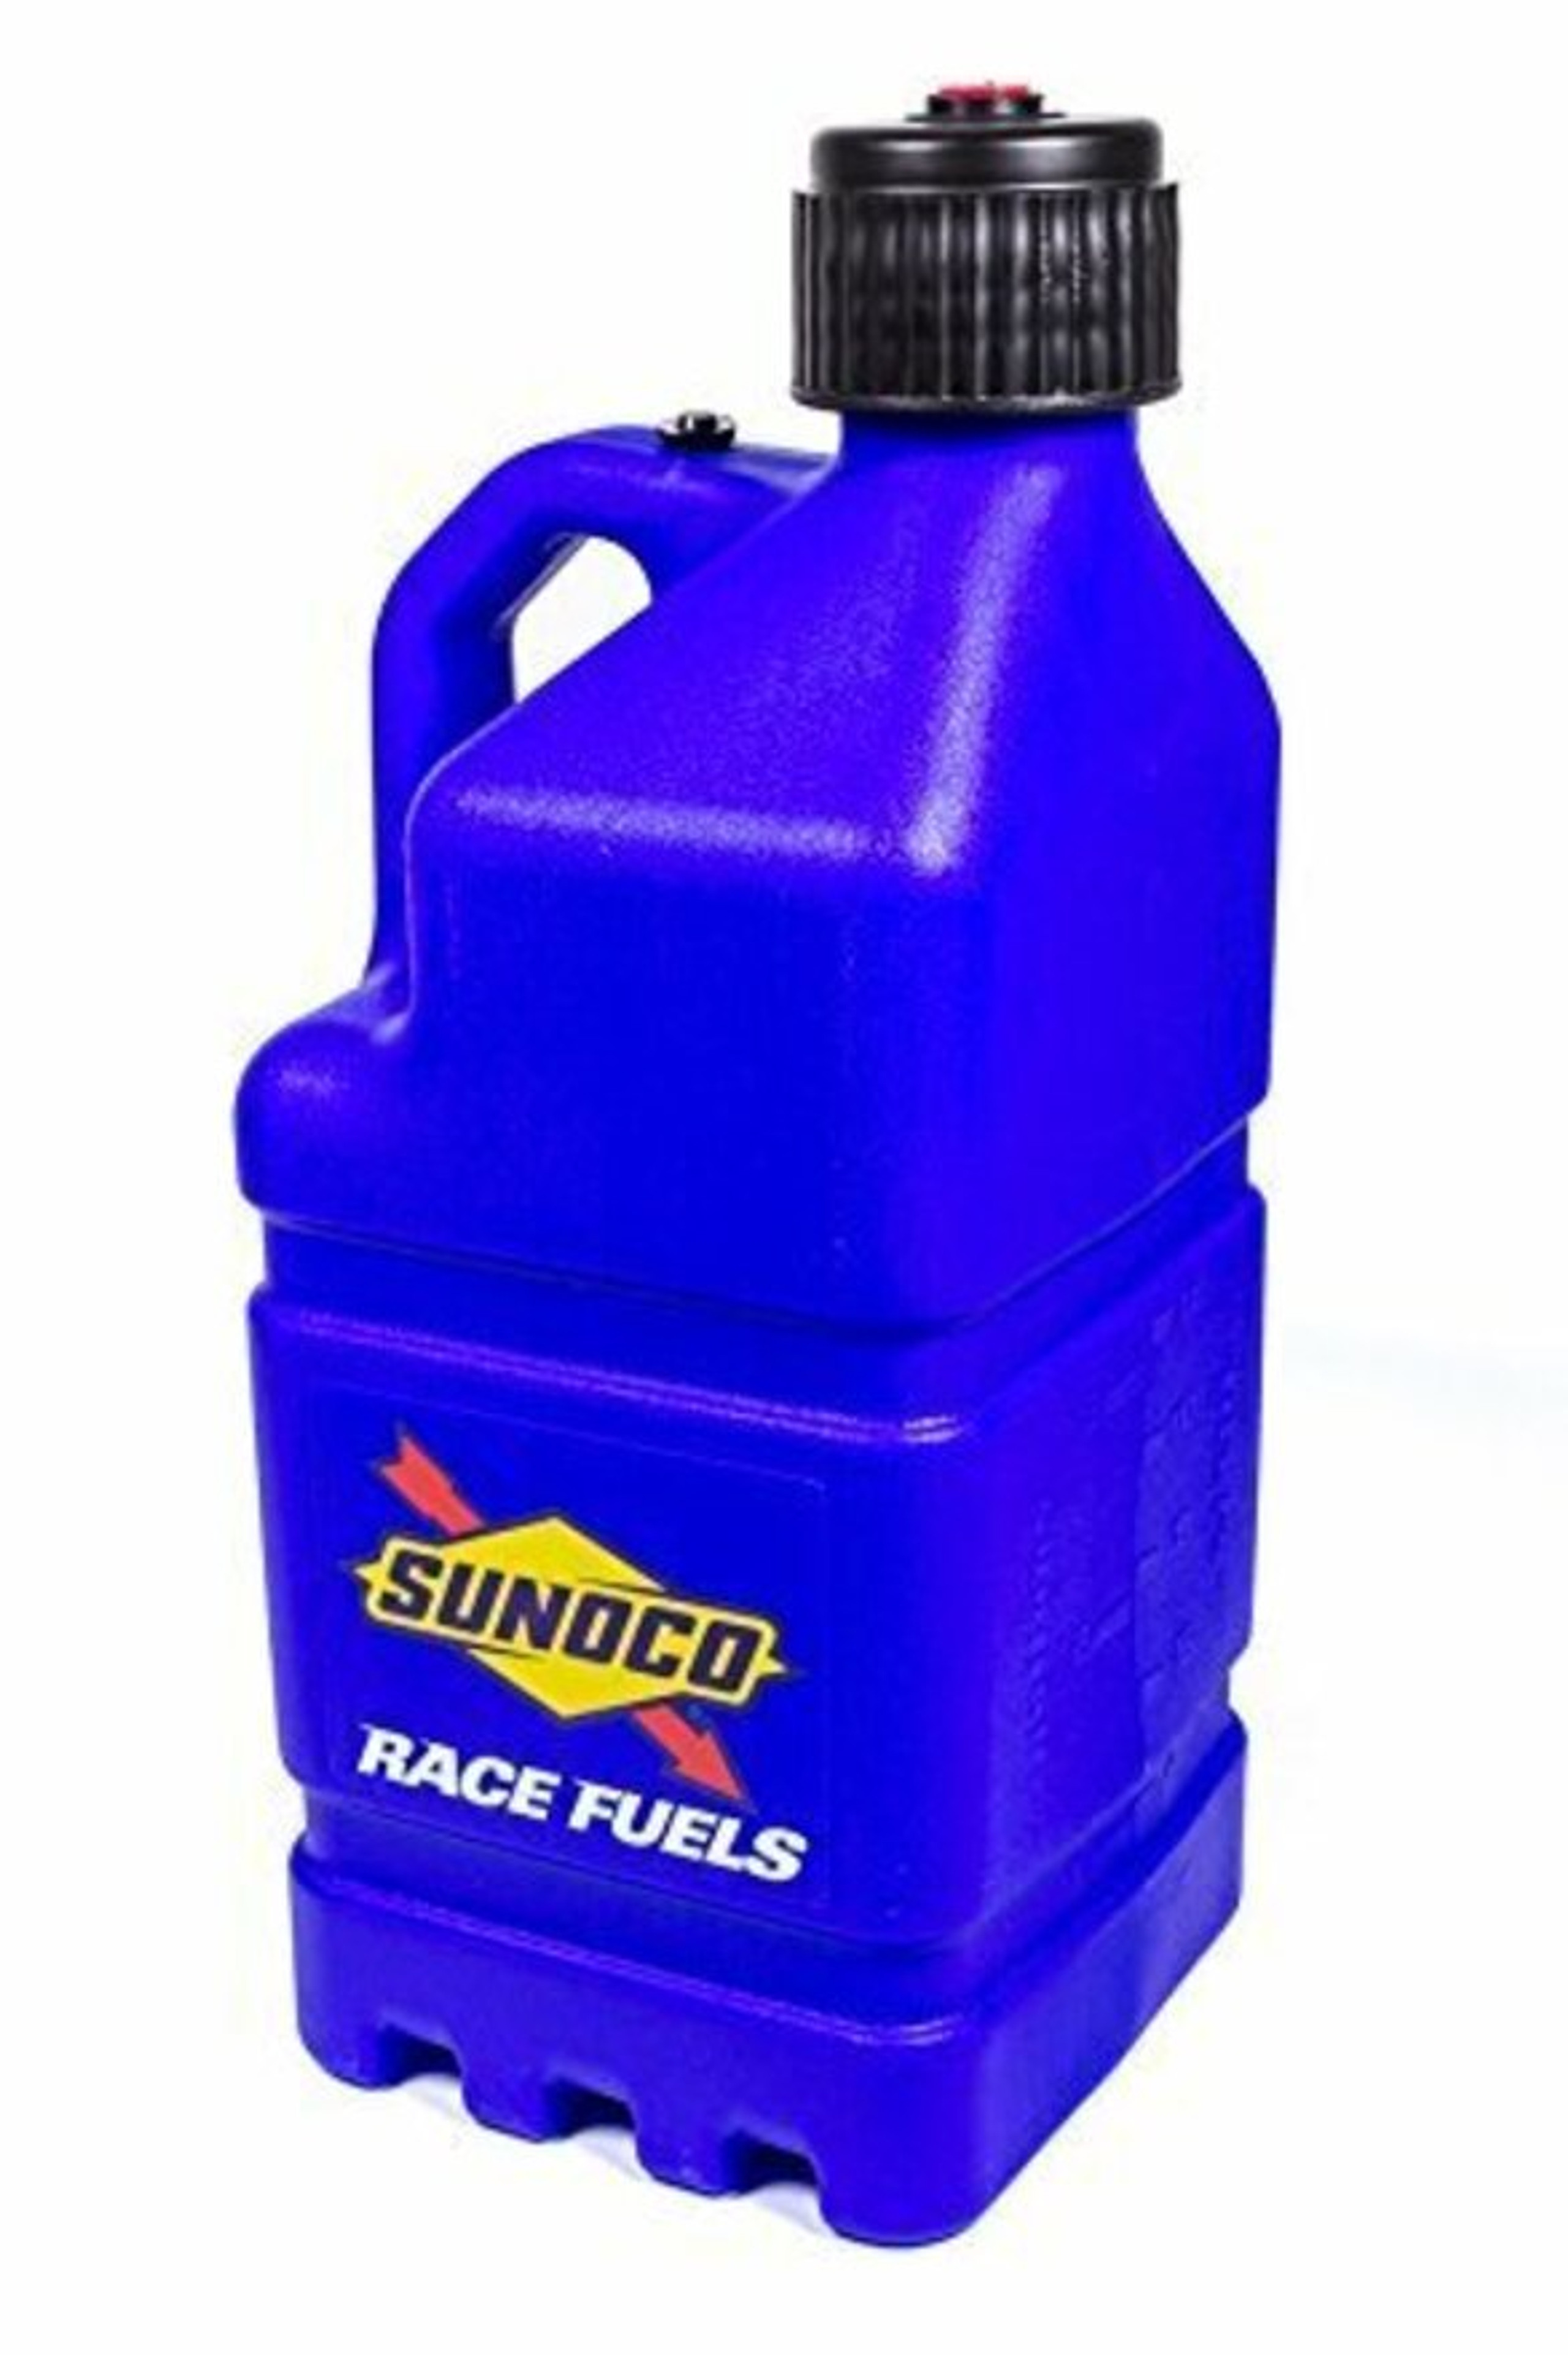 Sunoco Blue 5 Gallon Racing Fuel Jug for Sale